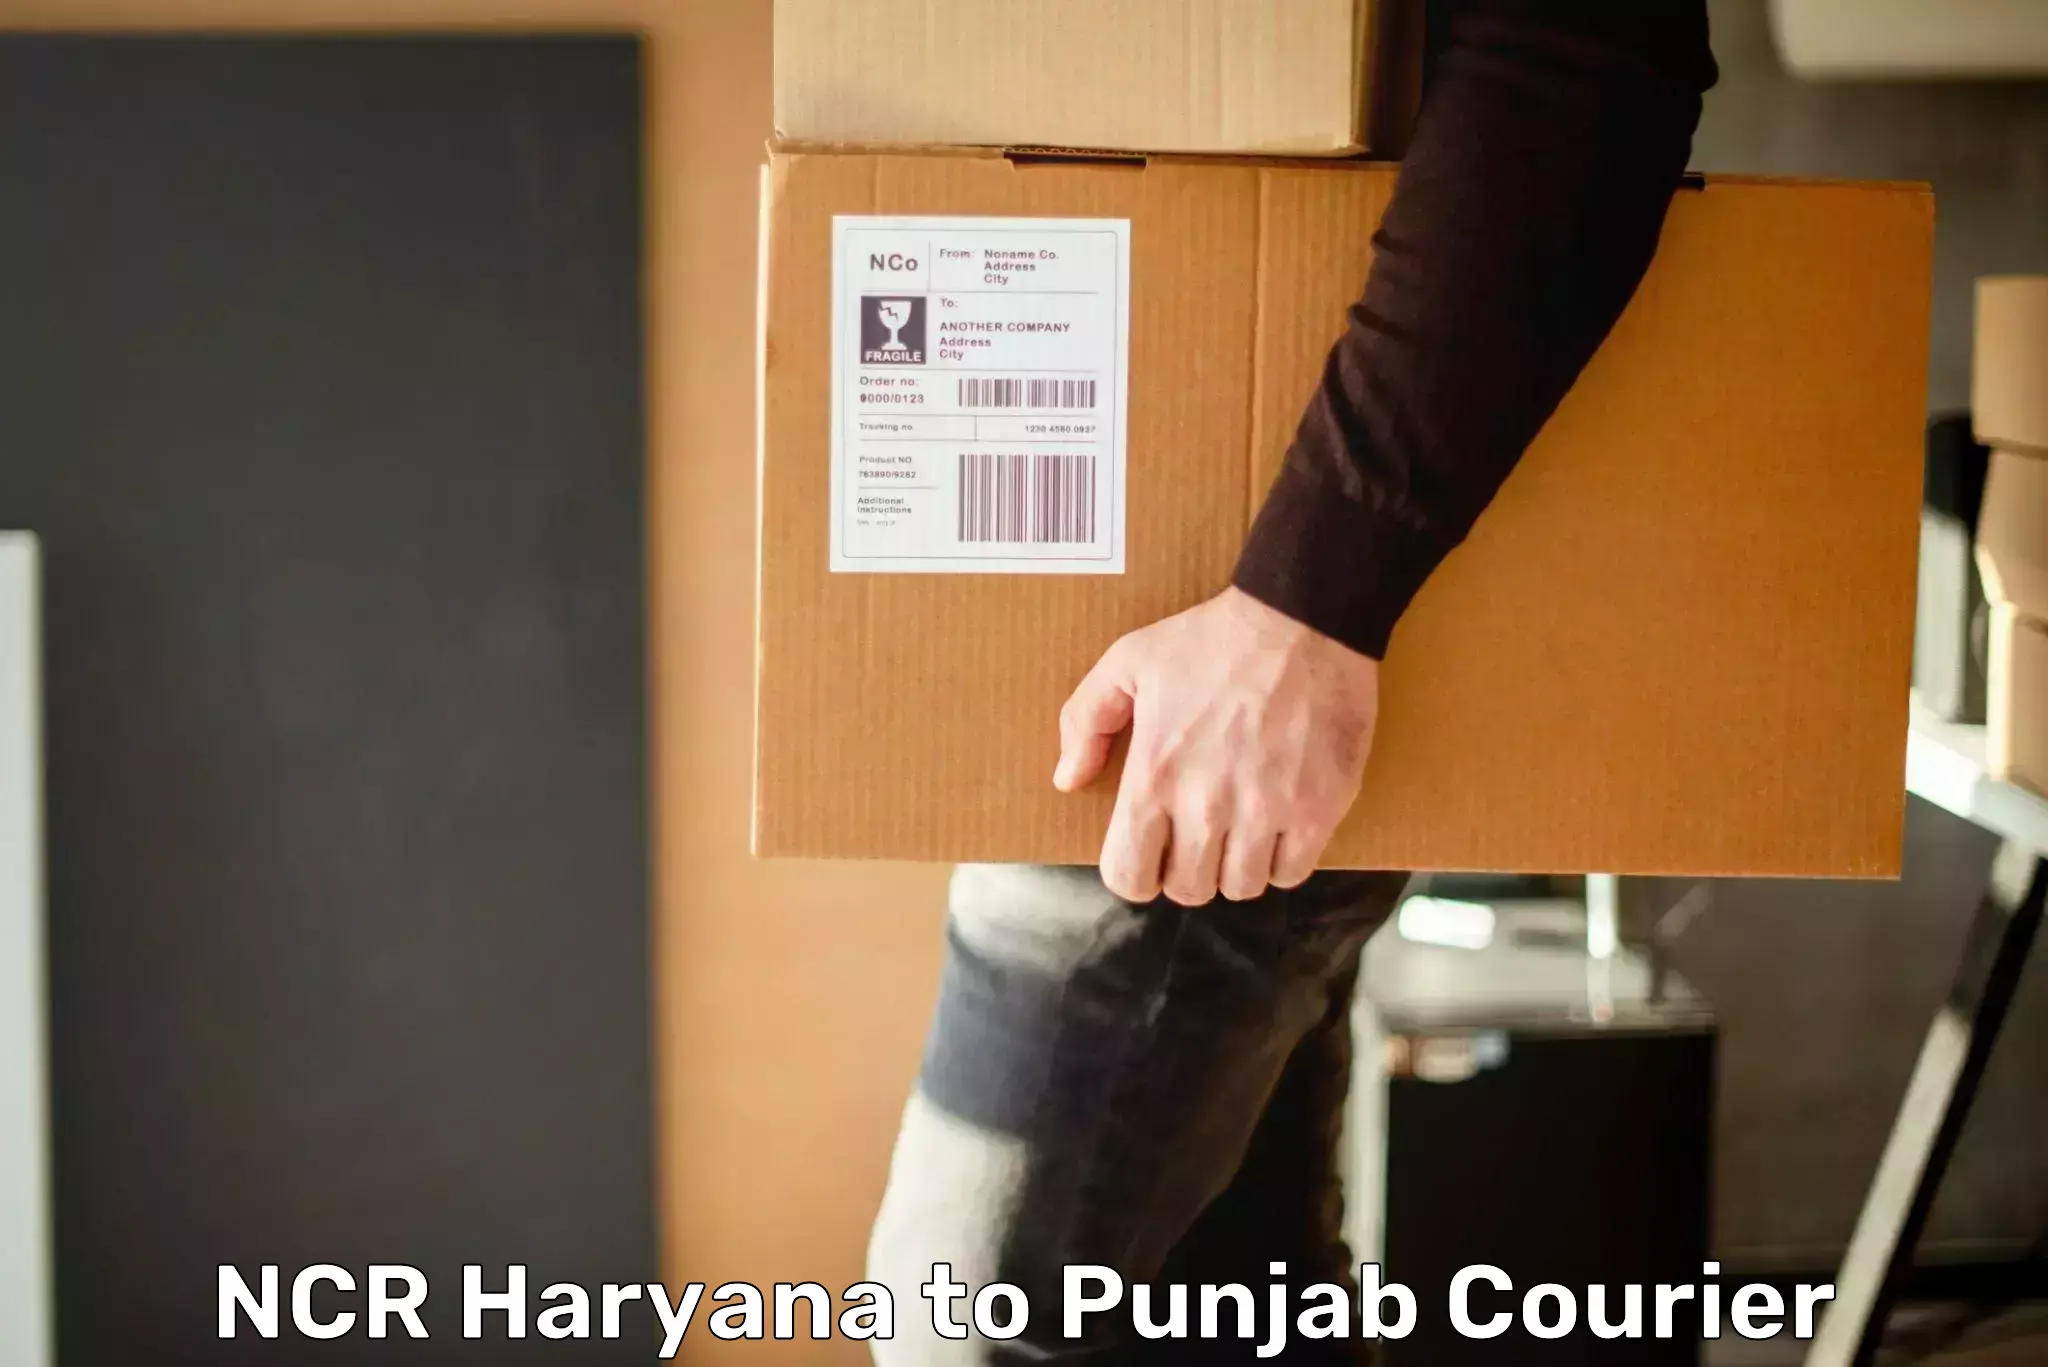 Courier insurance NCR Haryana to Tarsikka